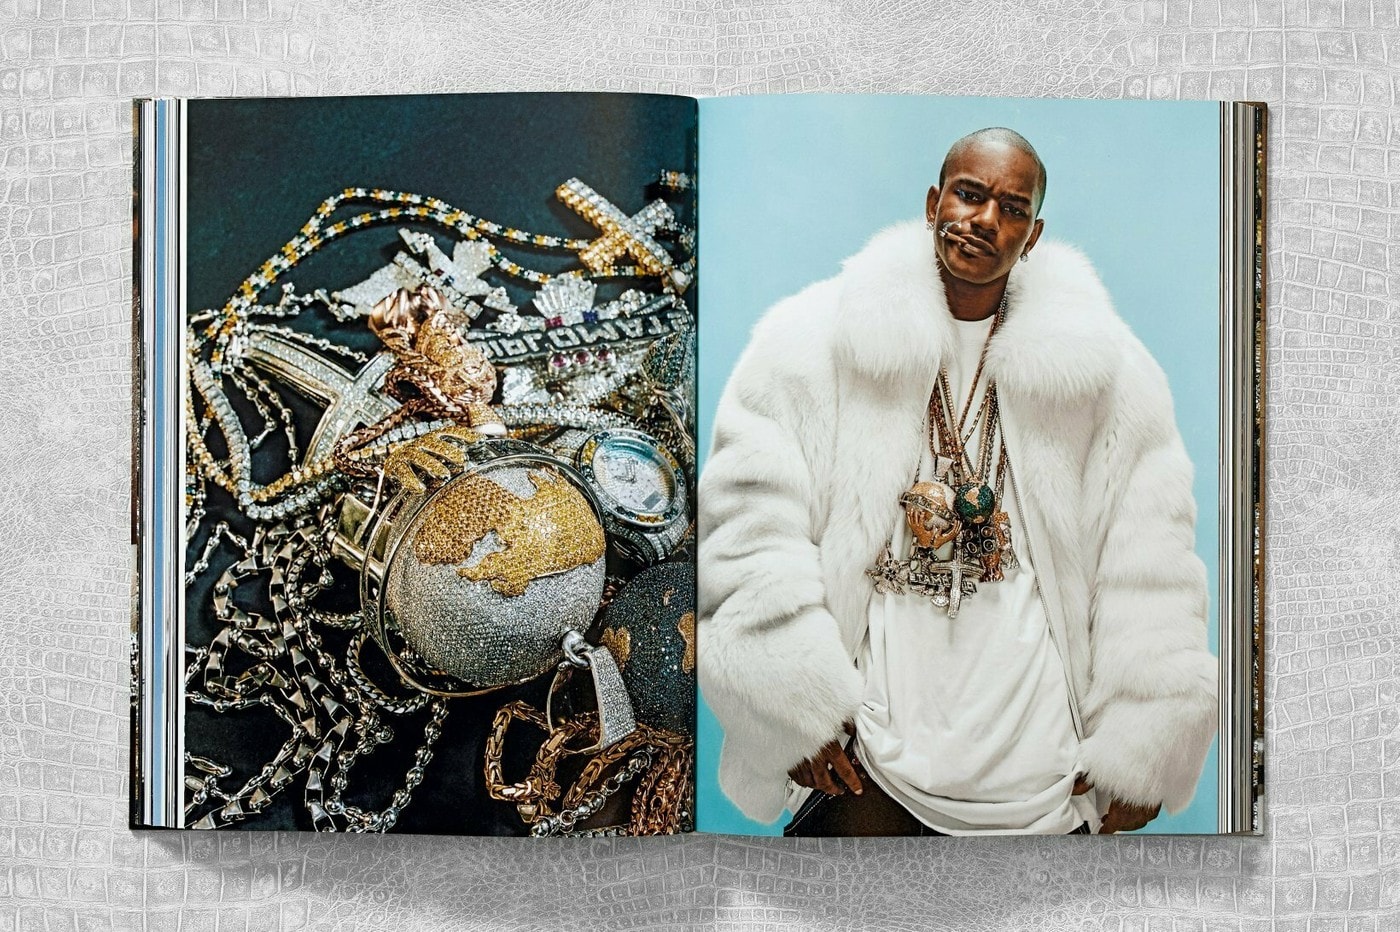 TASCHEN 重磅新書《Ice Cold: A Hip-Hop Jewelry History》正式登場